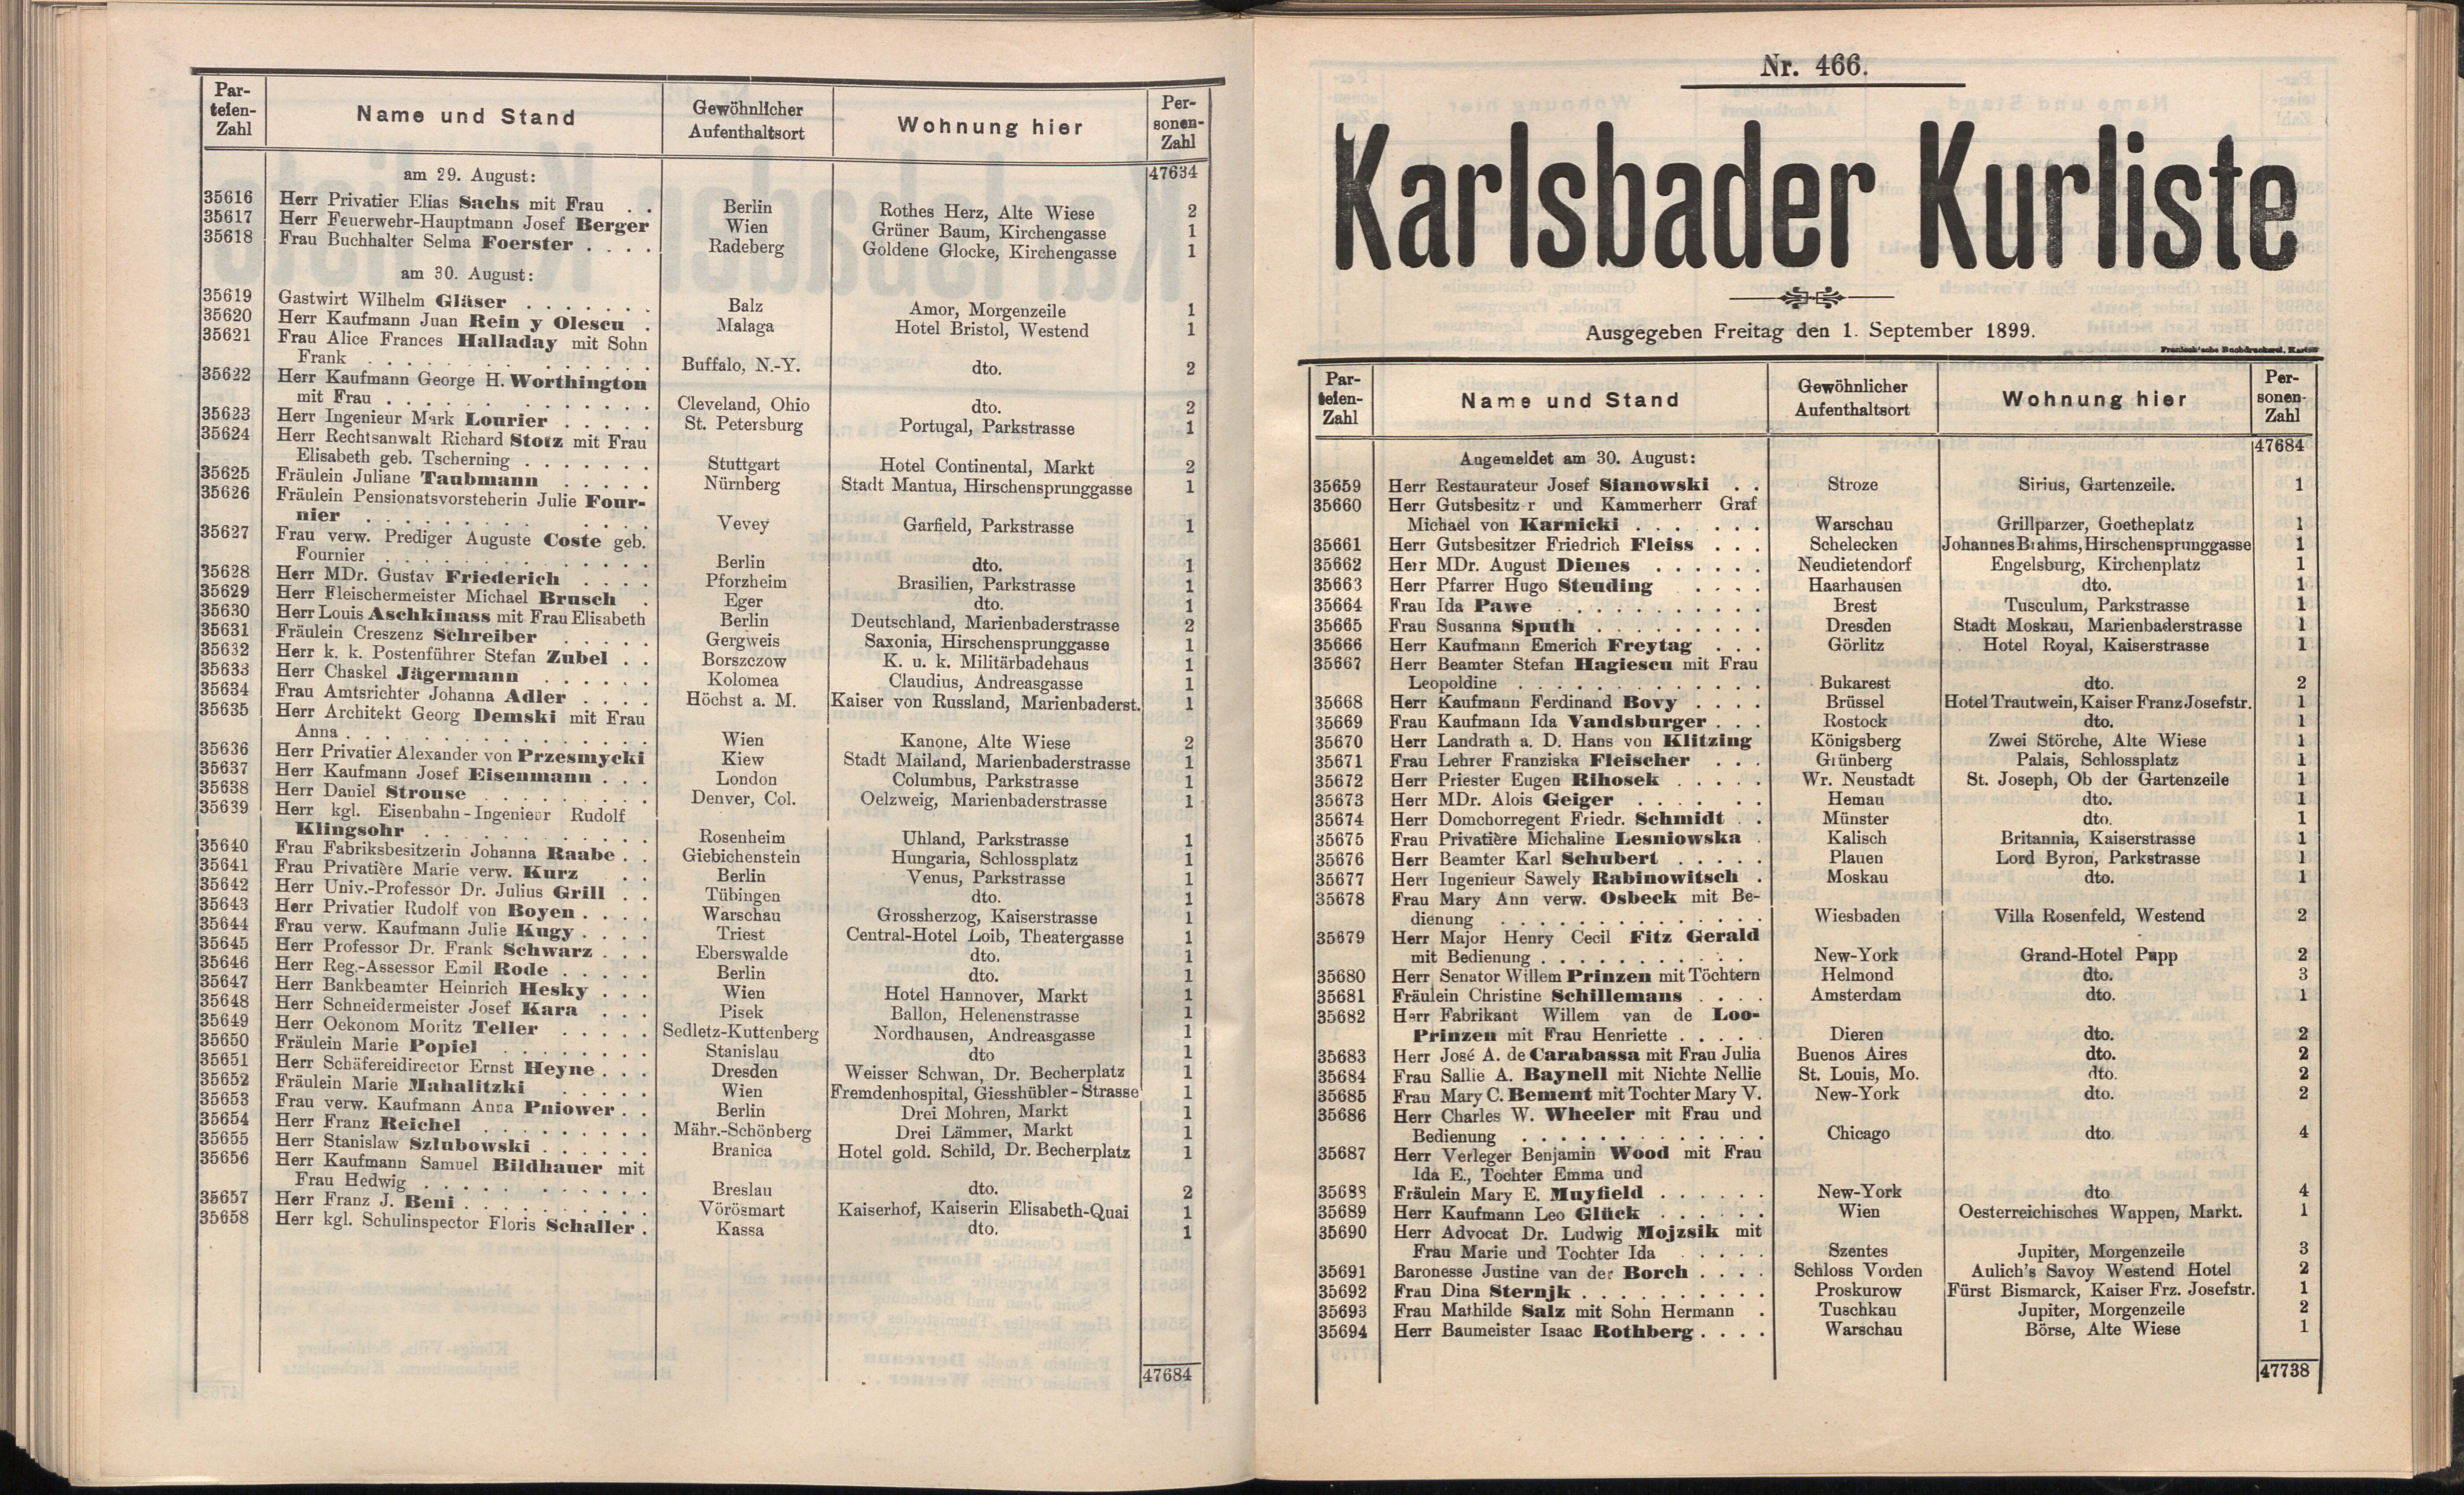 484. soap-kv_knihovna_karlsbader-kurliste-1899_4850